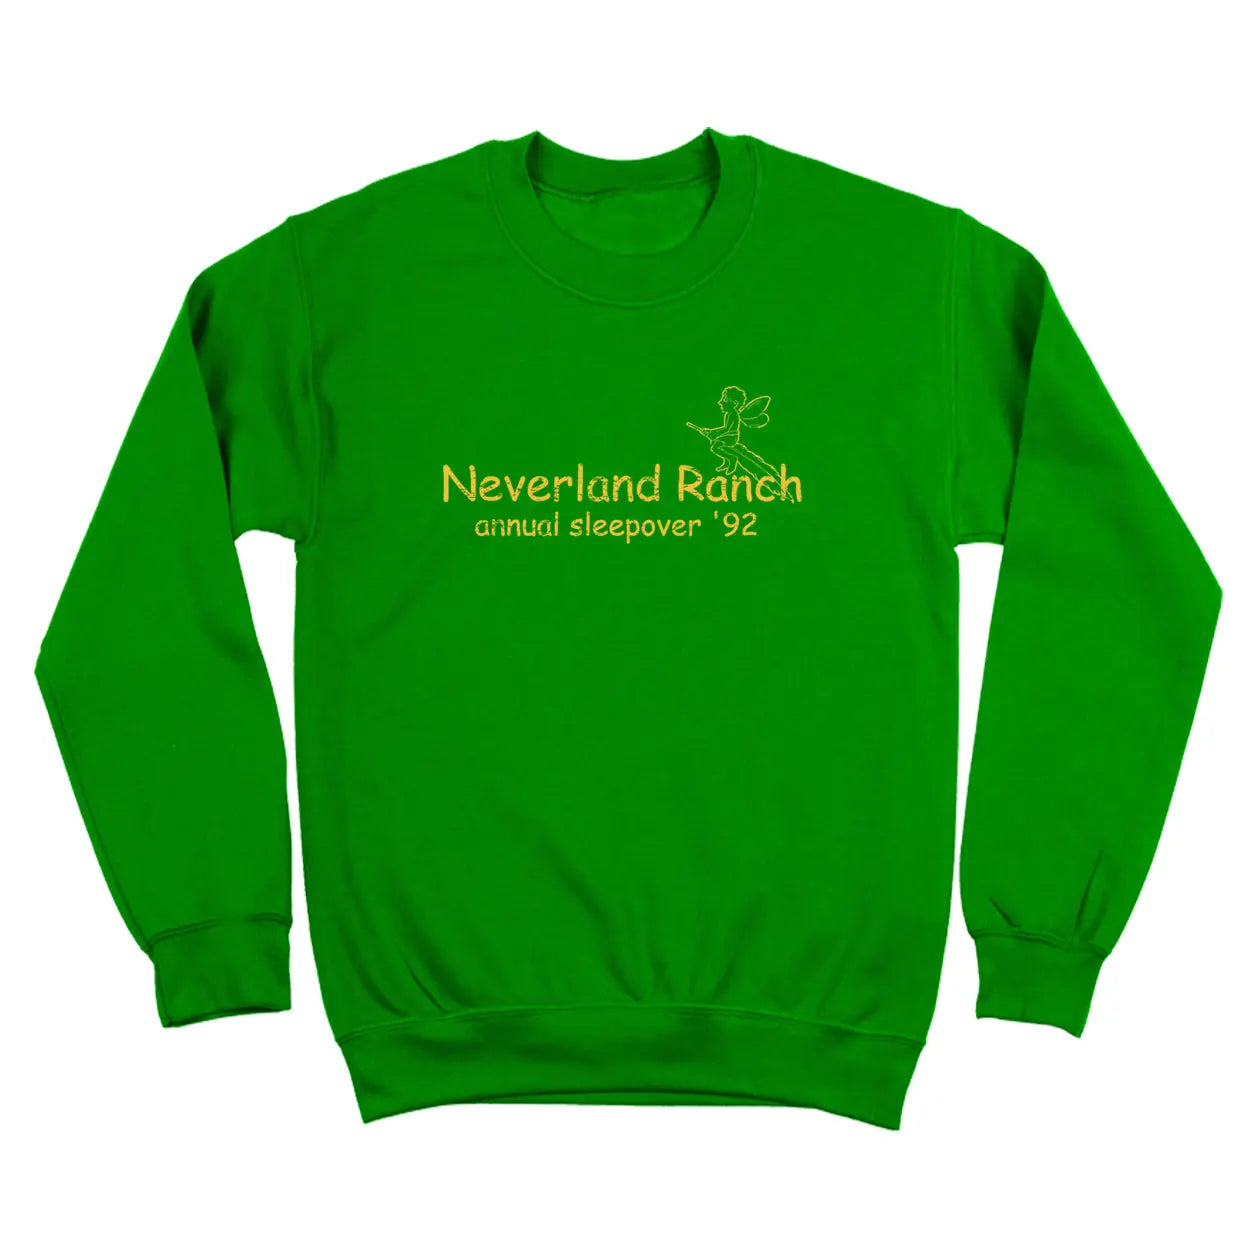 Neverland Ranch Sleepover 92 Tshirt - Donkey Tees